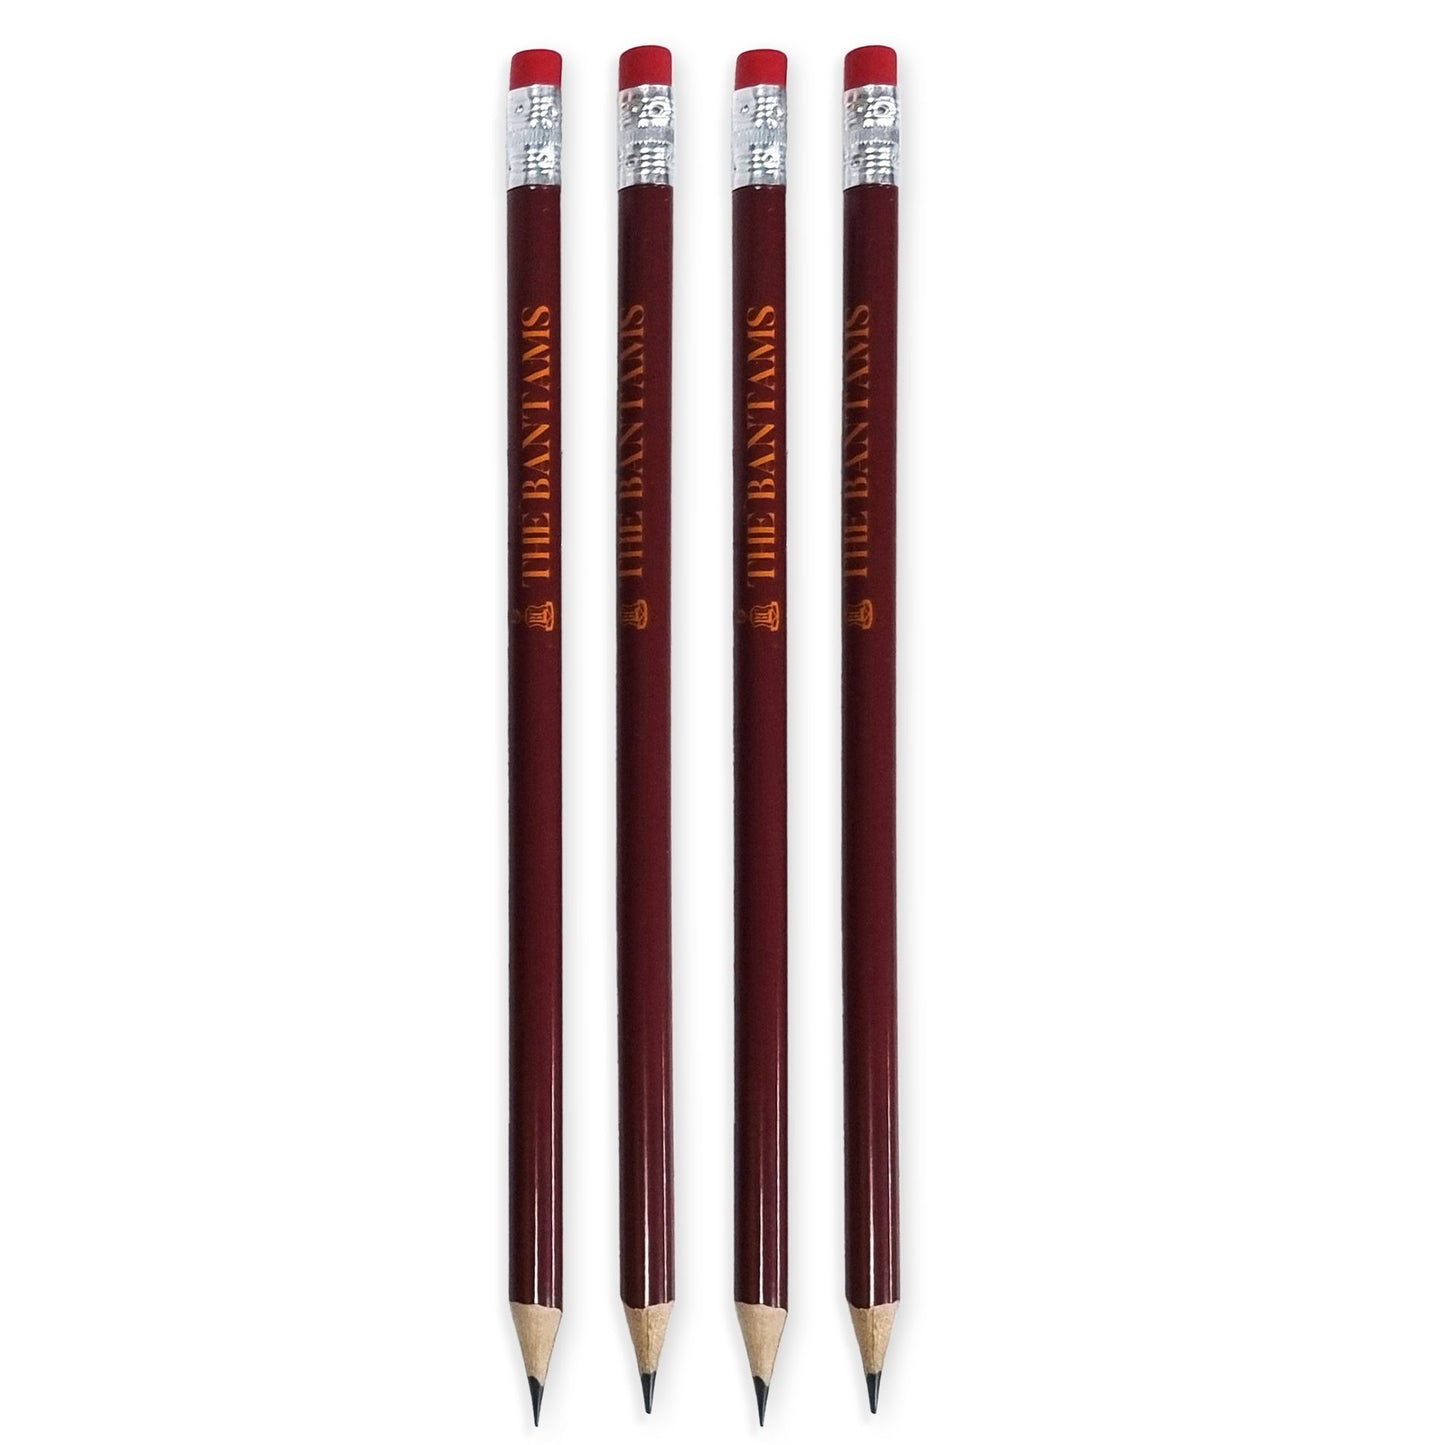 BCAFC 4 Pack Pencils